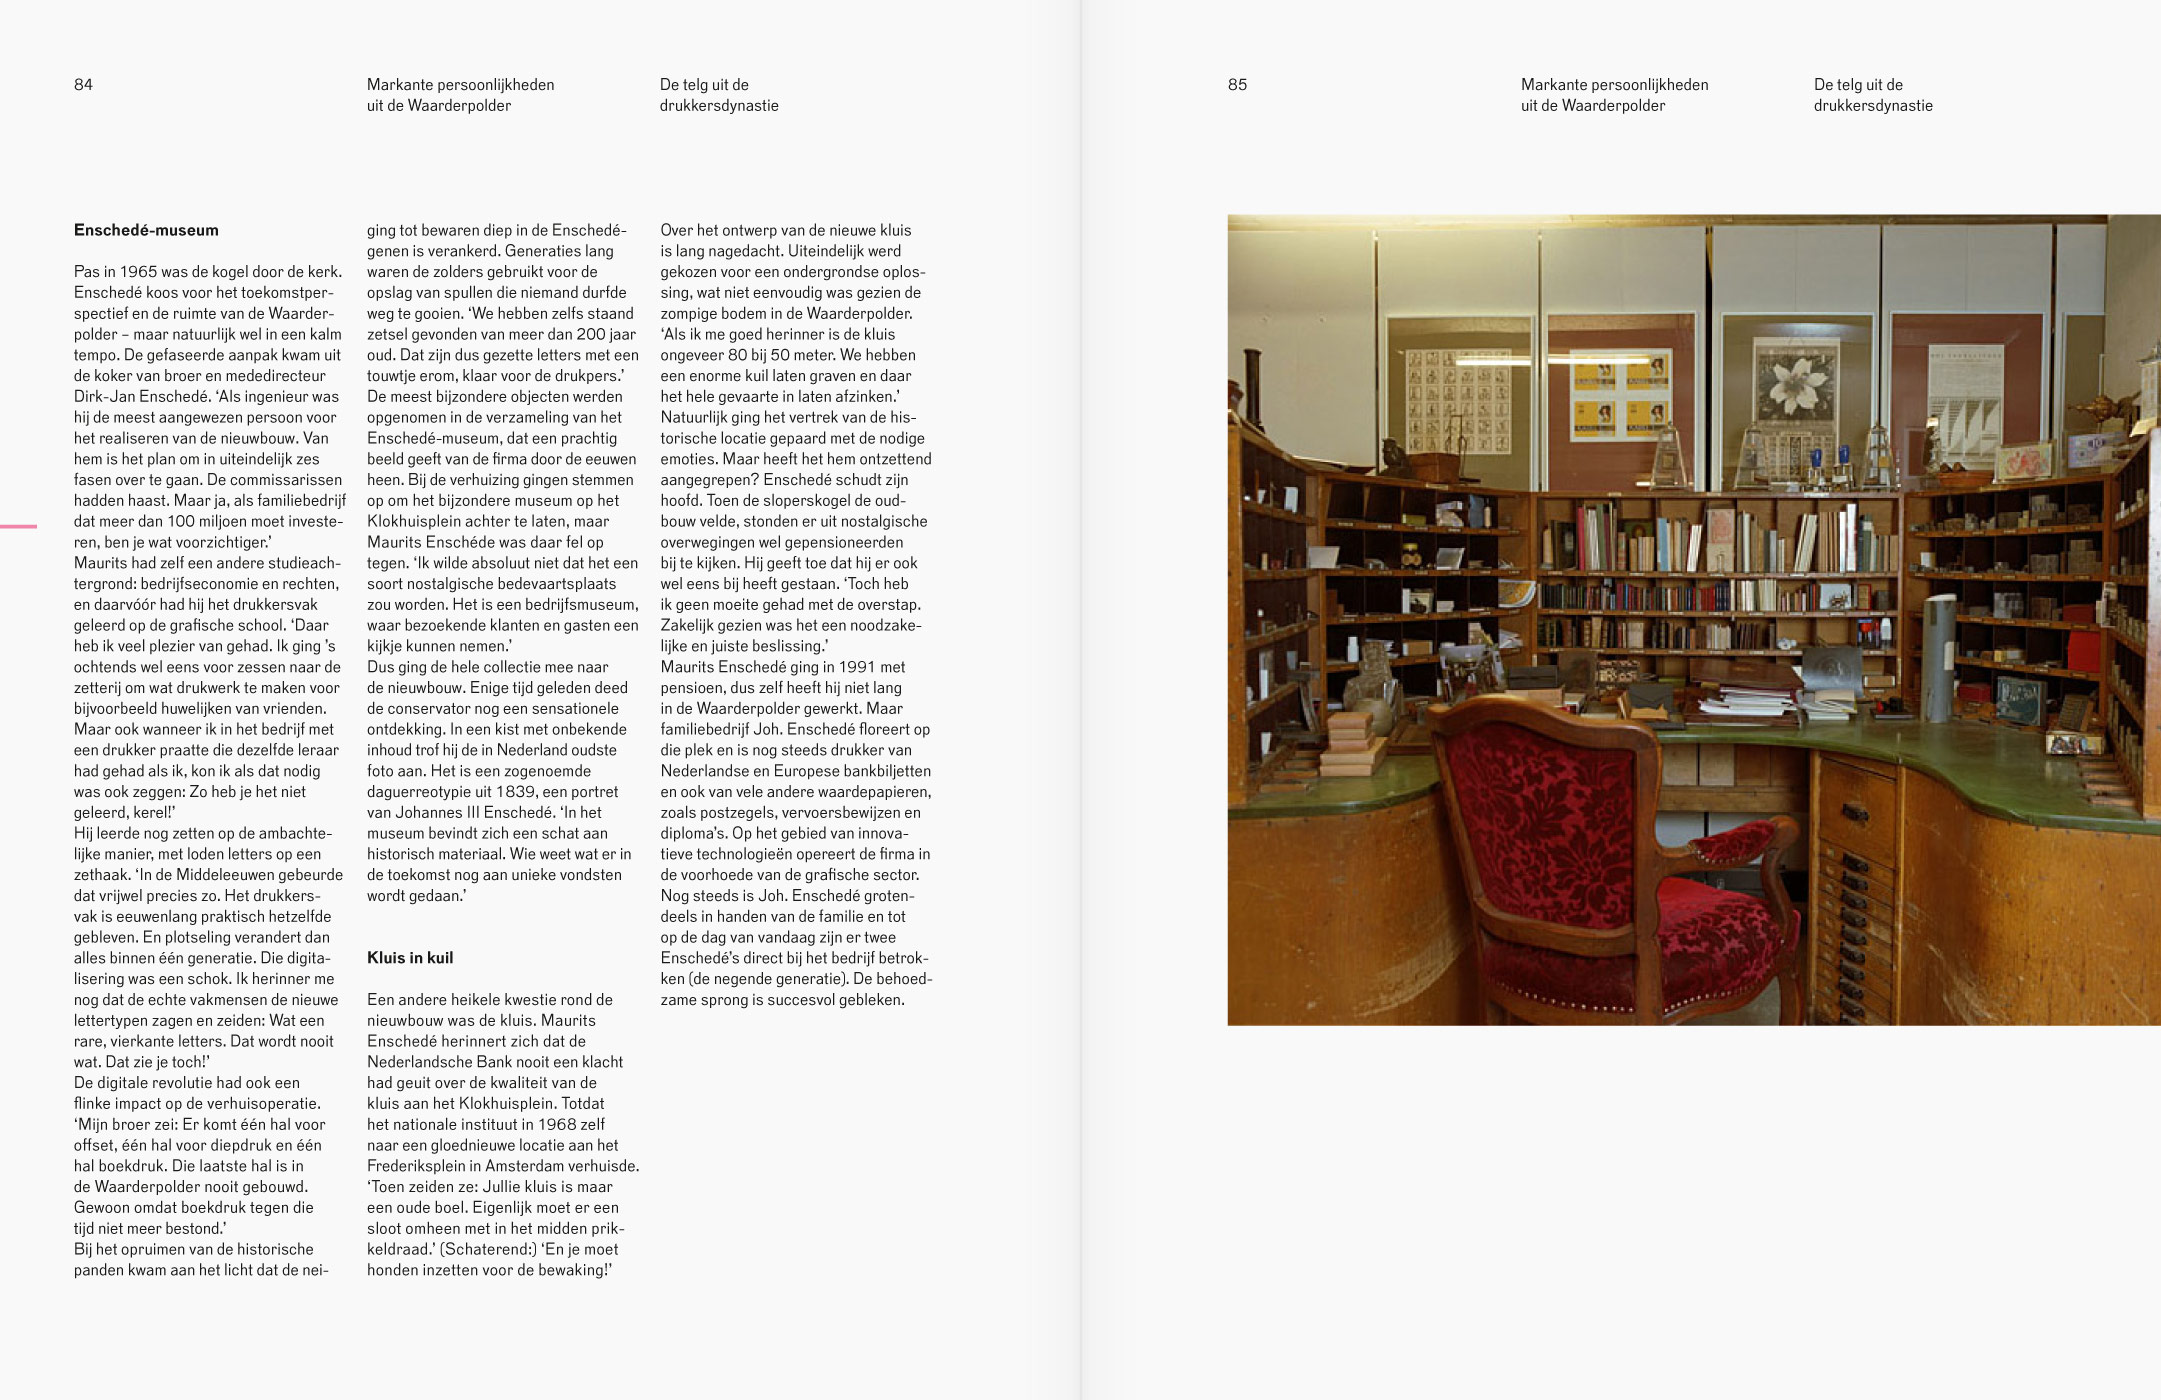 De waardepolder Haarlem editorial design publication